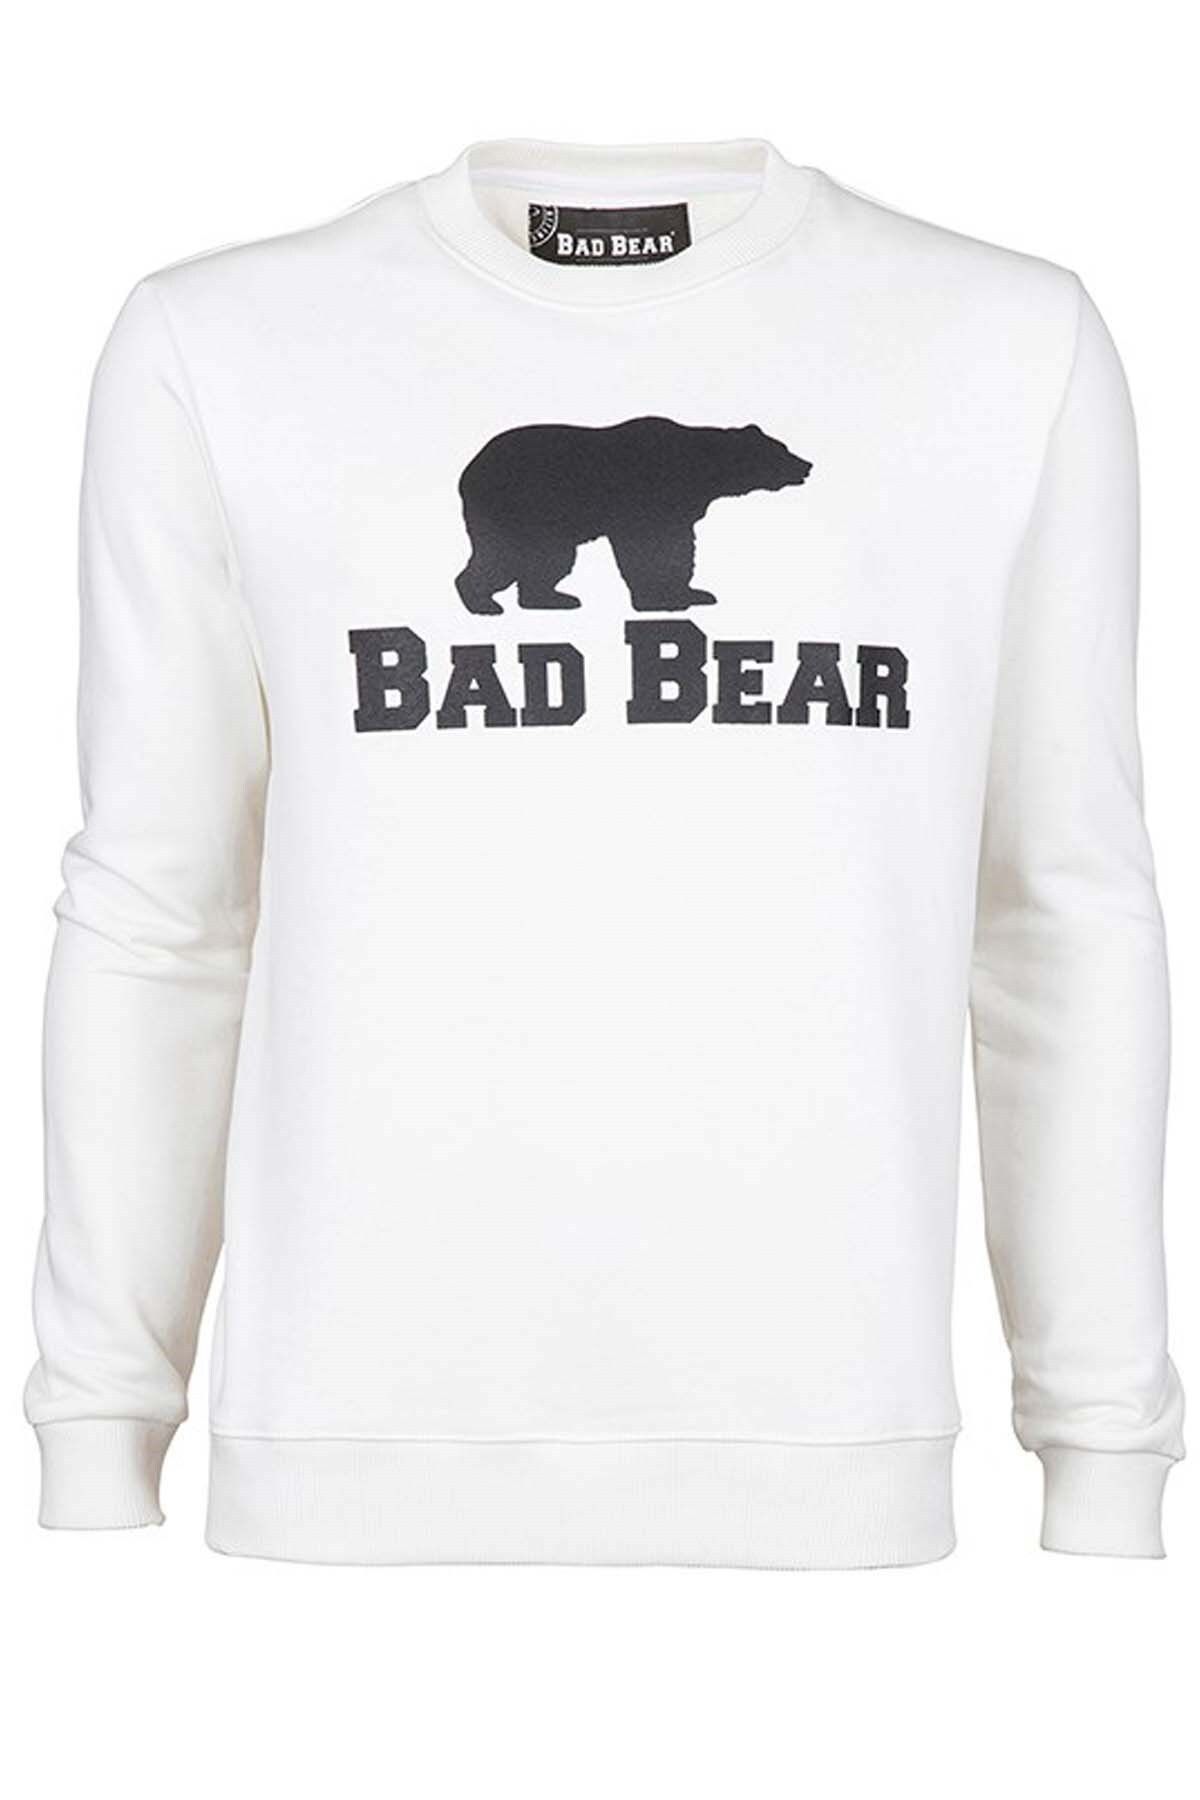 Bad Bear Crewneck Erkek Sweatshirt 20.02.12.011off-whıte